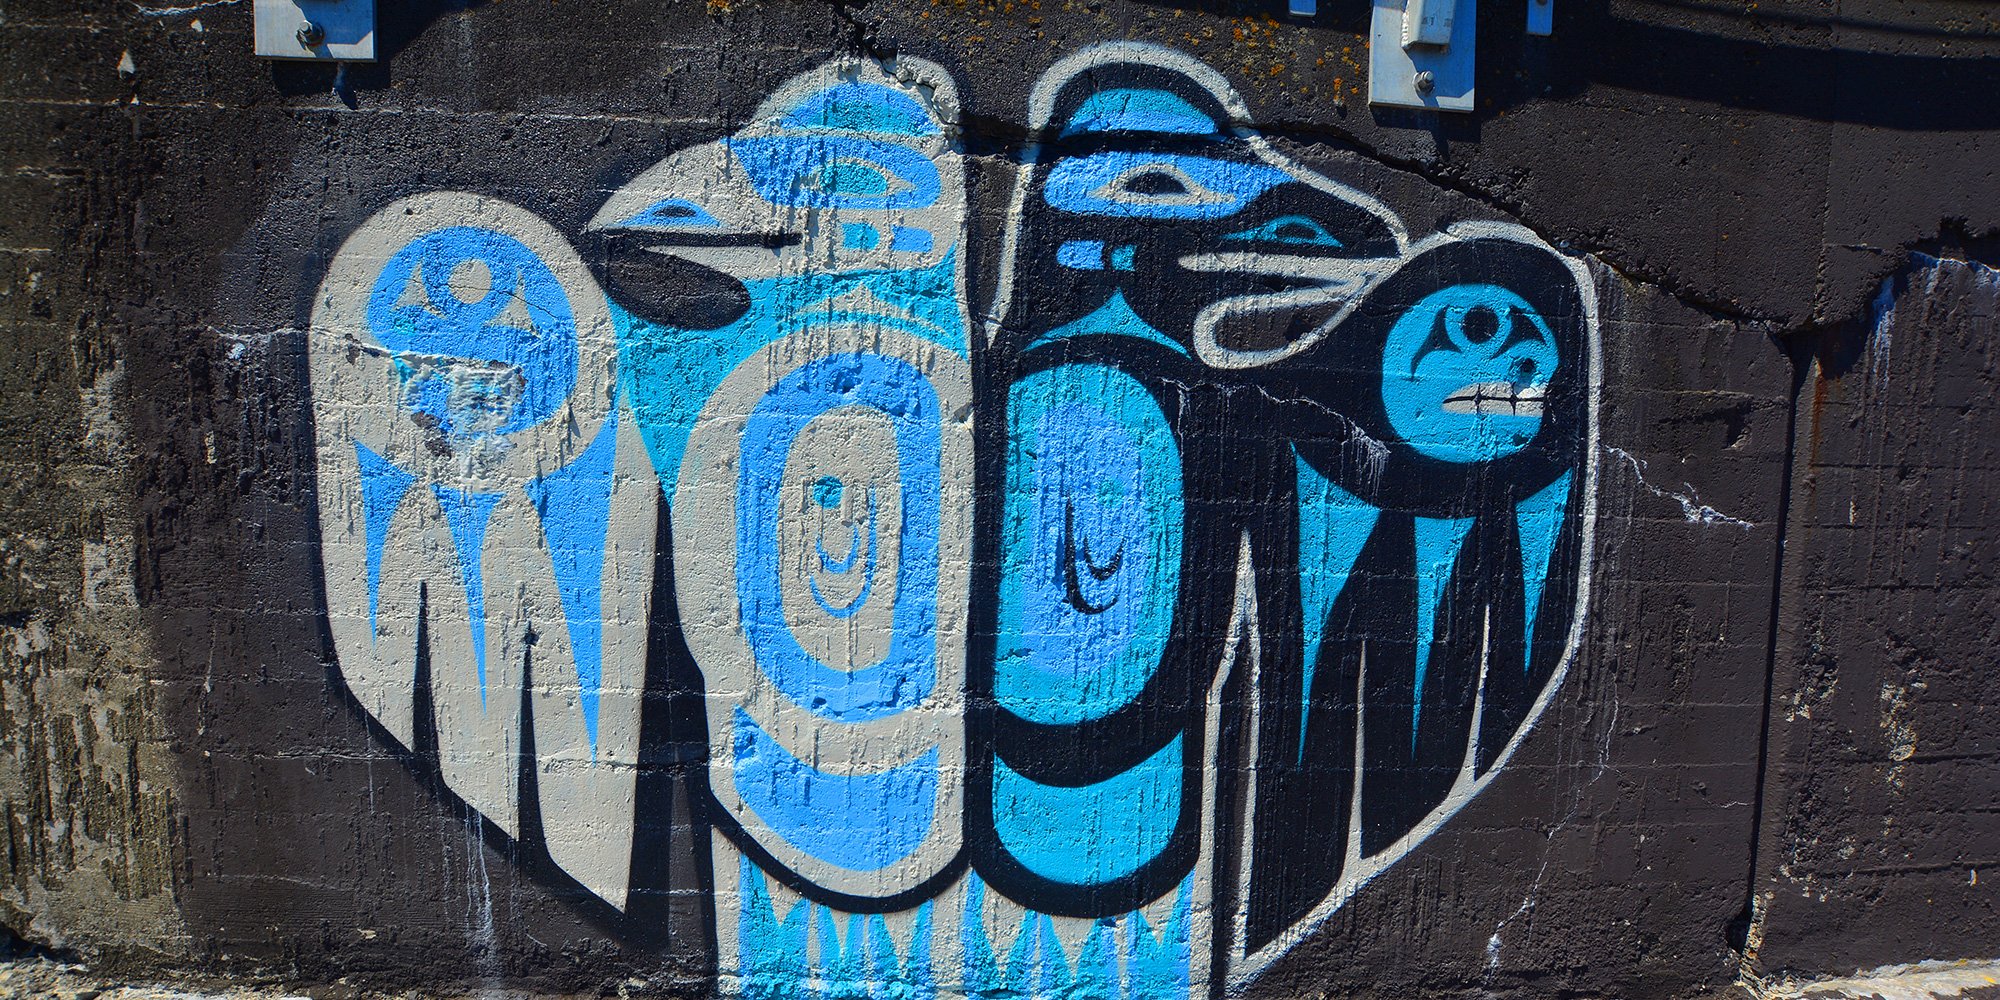 Indigenous graffiti